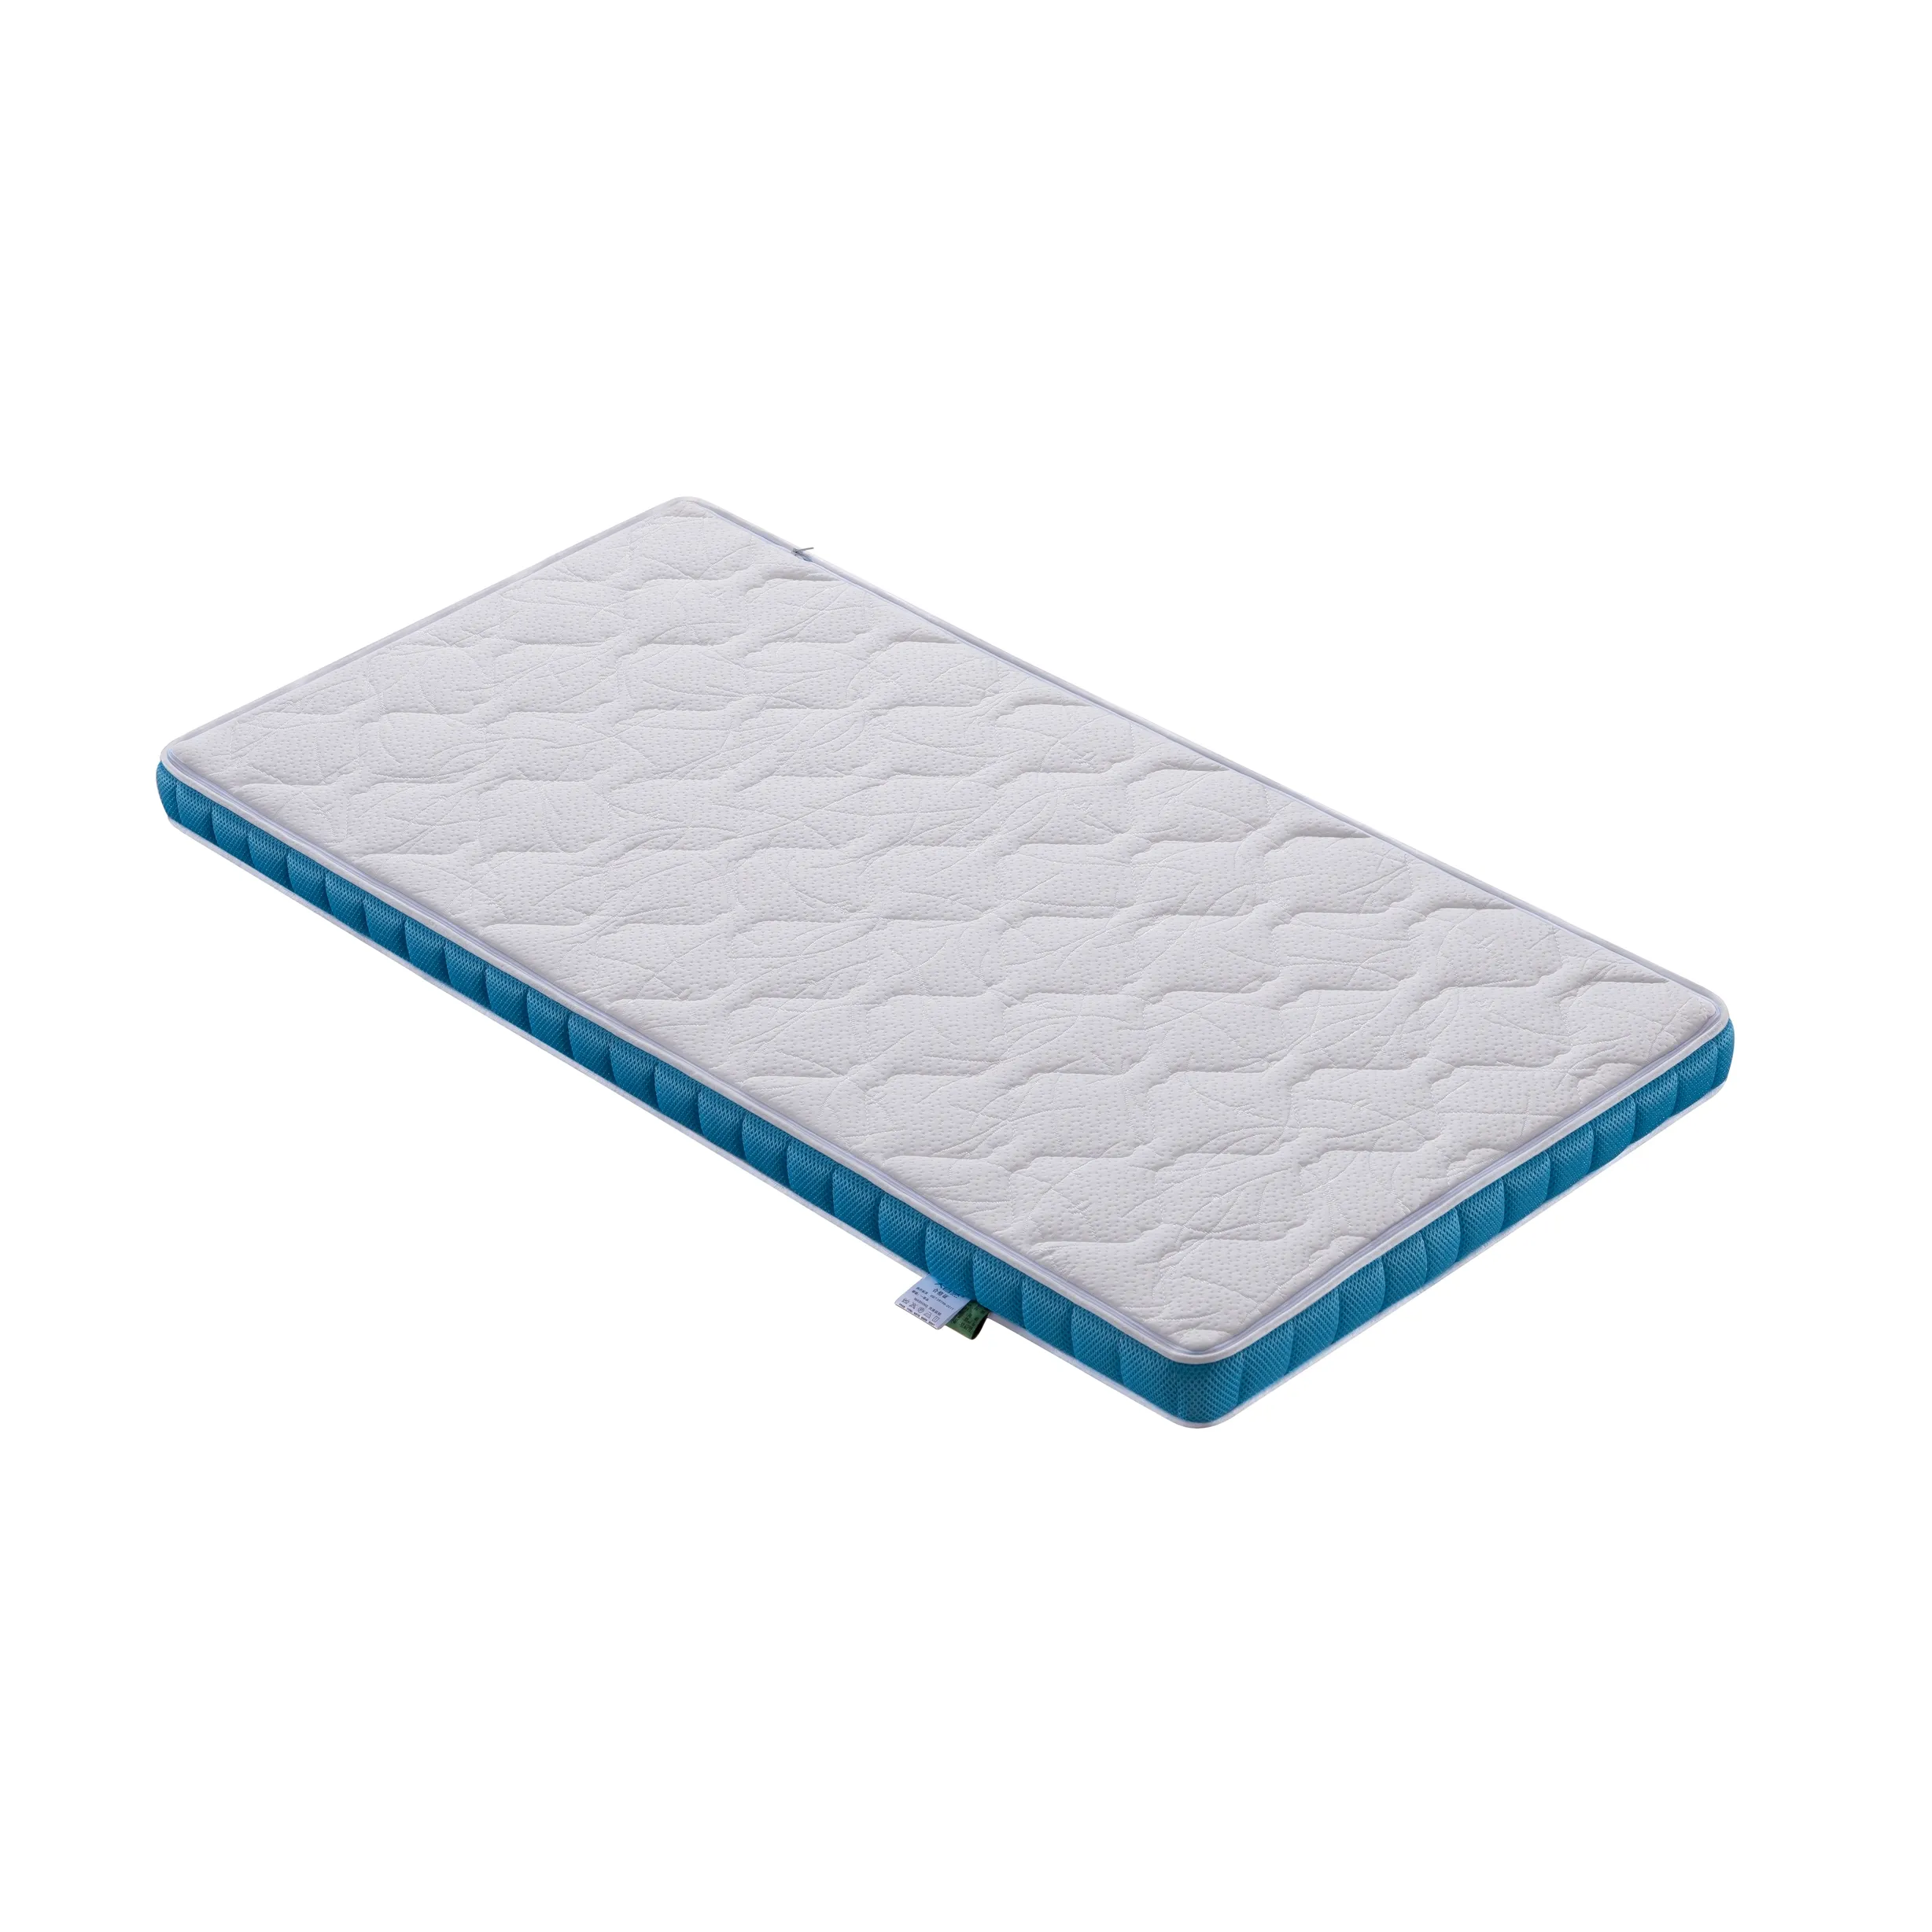 Latex Mattress Attractive Price New Natural Type Memory Air Fiber Crib kids mattress